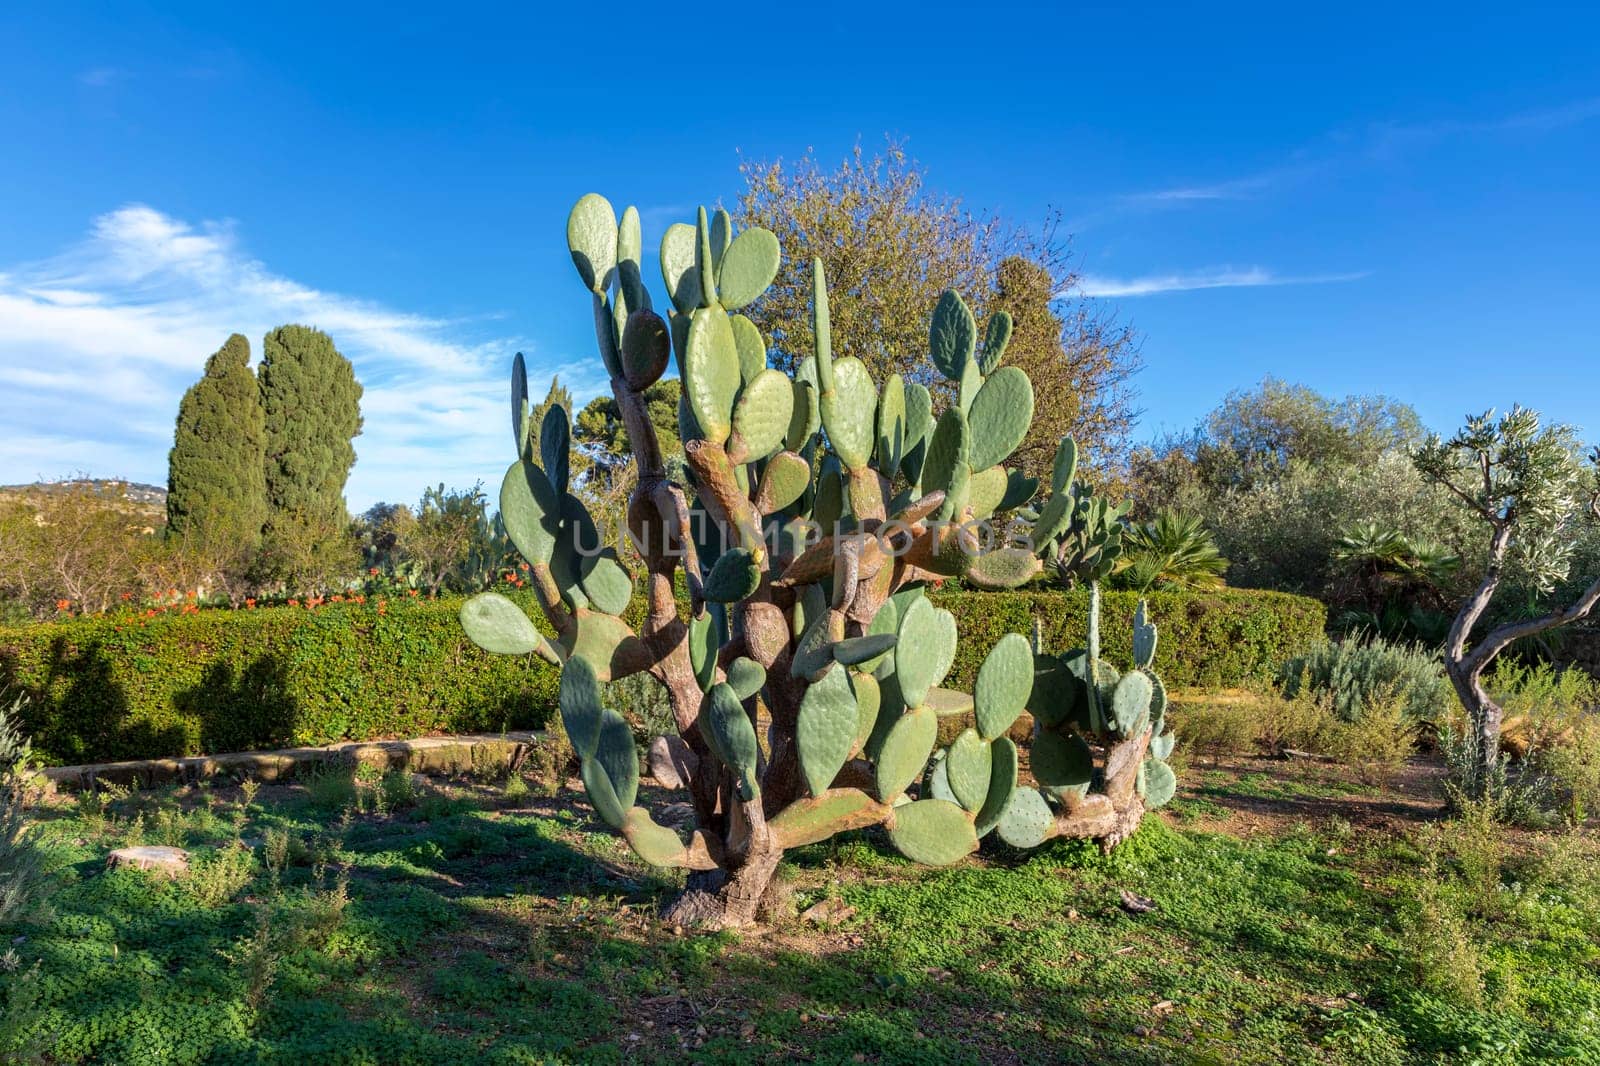 Big cactus at garden of the Villa Aurea in Valley of the Temples, Agrigento, Sicily, Italy